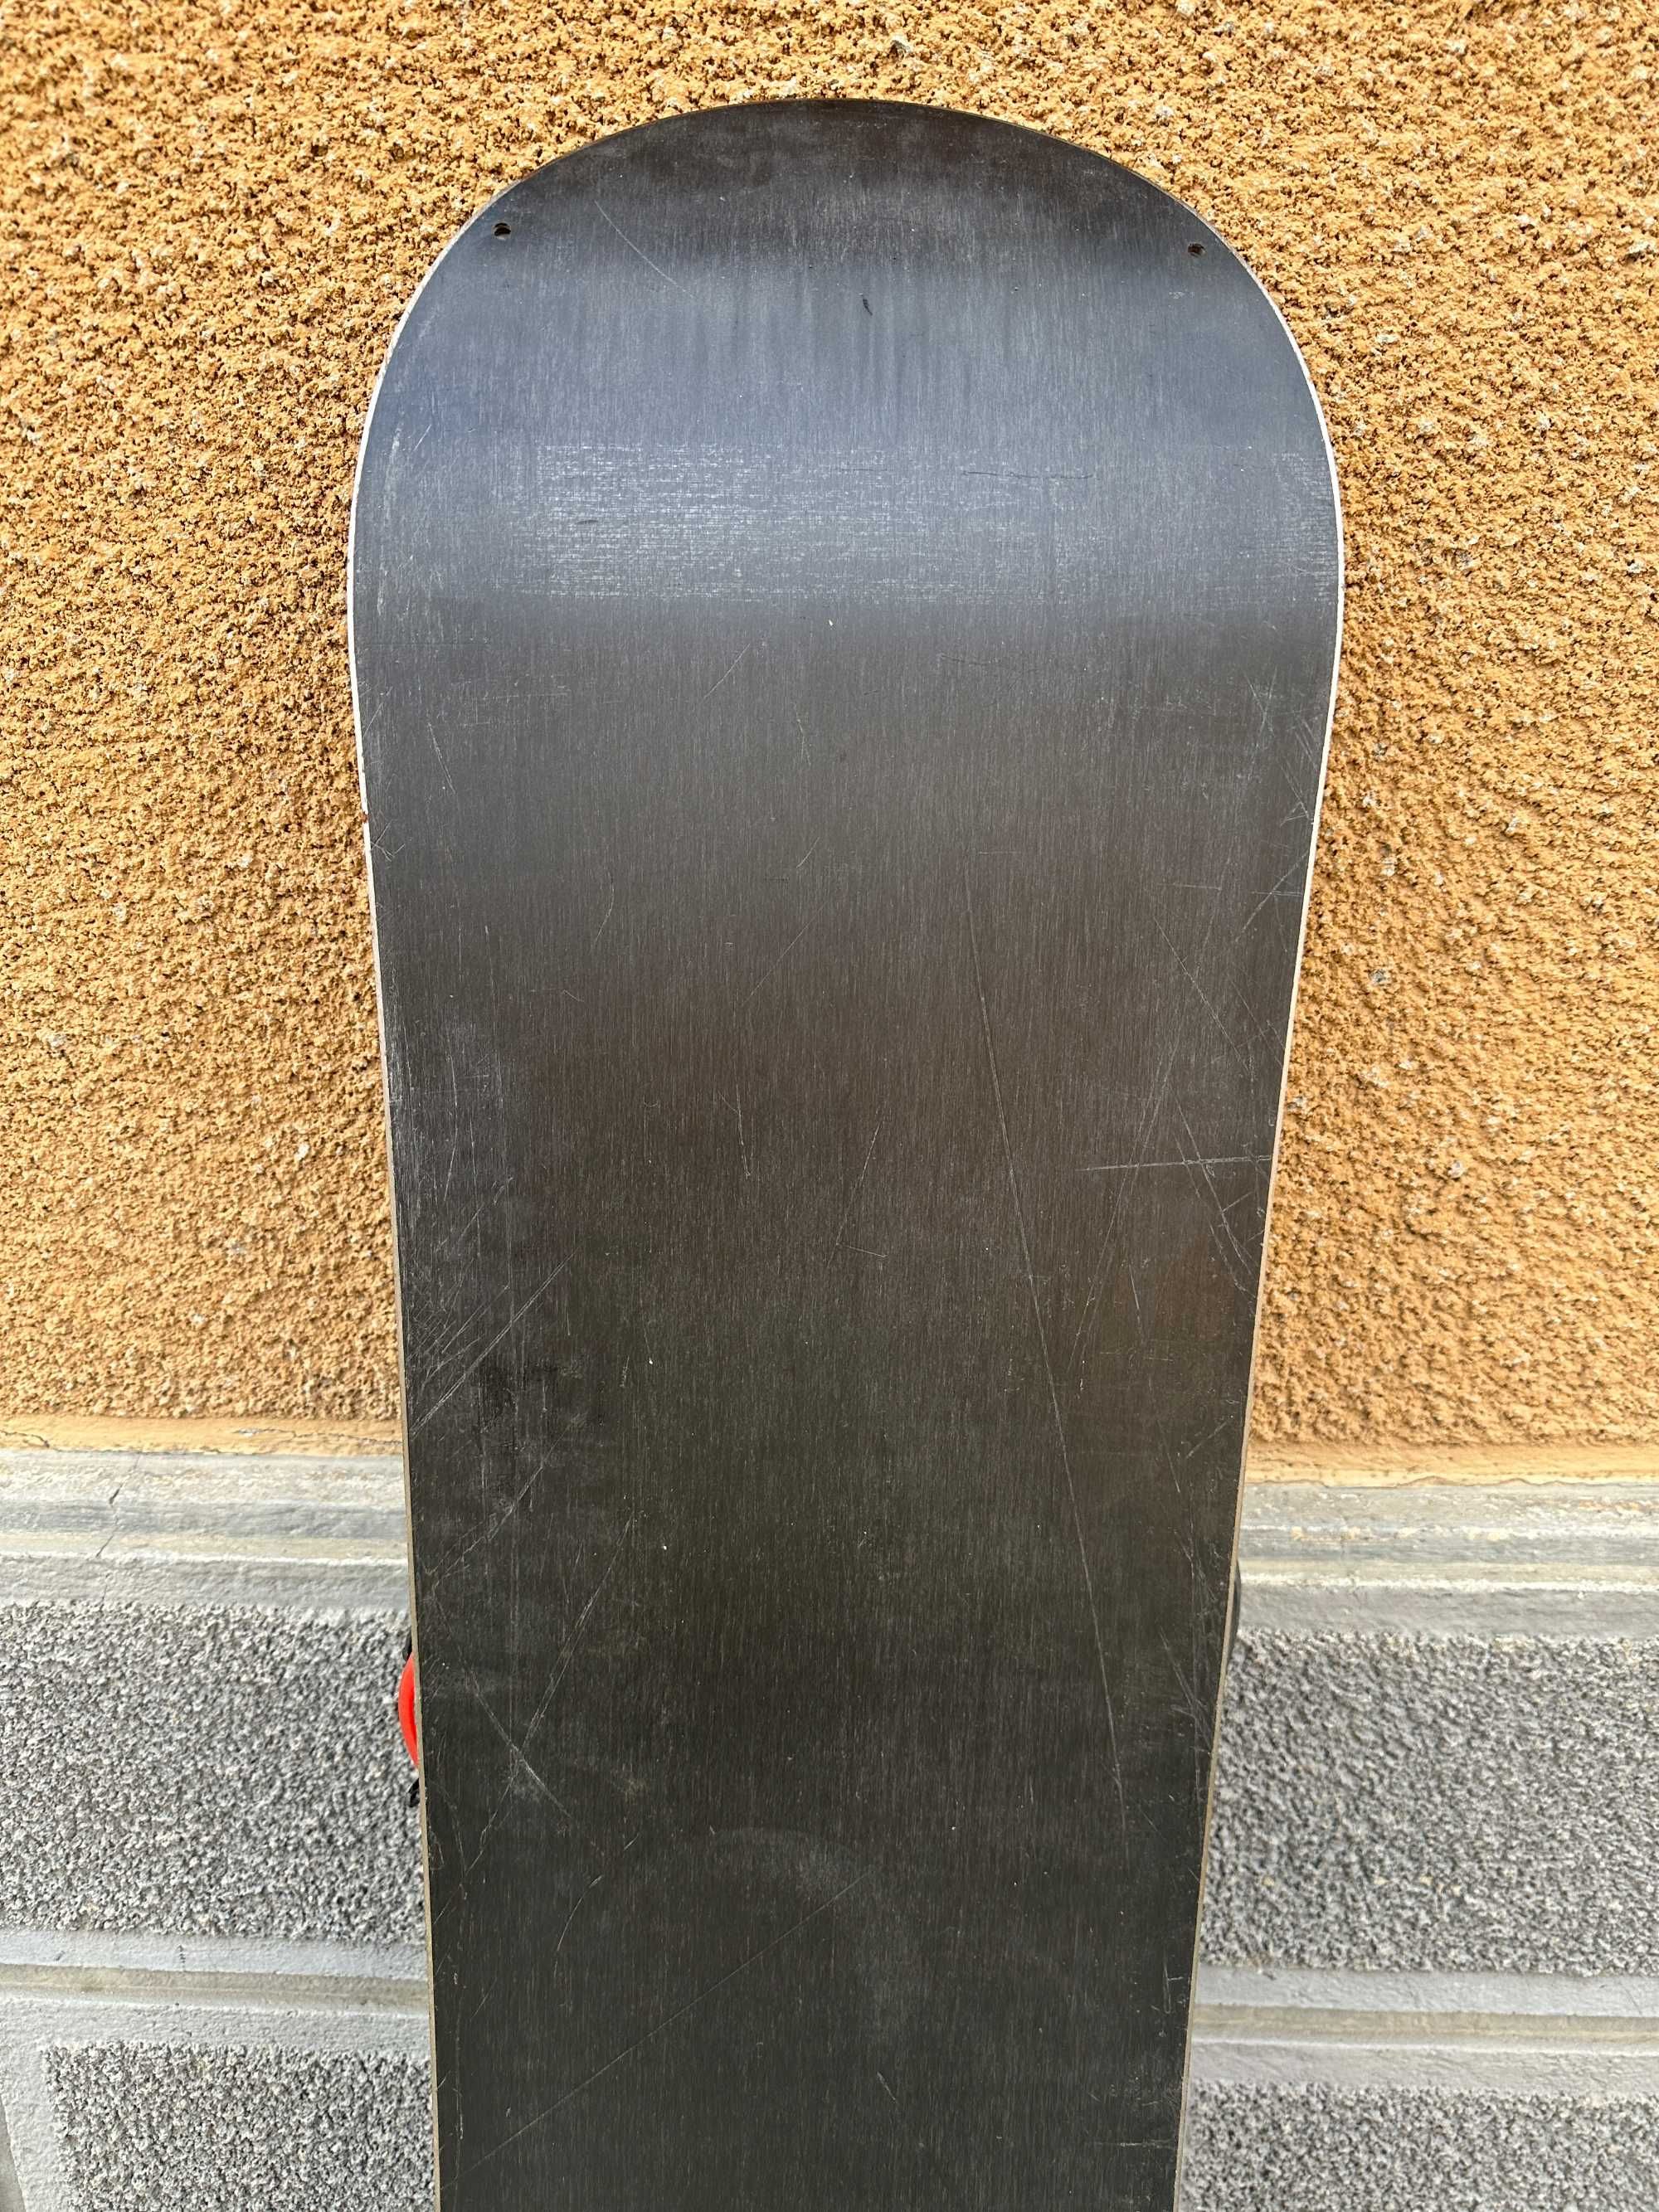 placa snowboard nidecker access L158cm